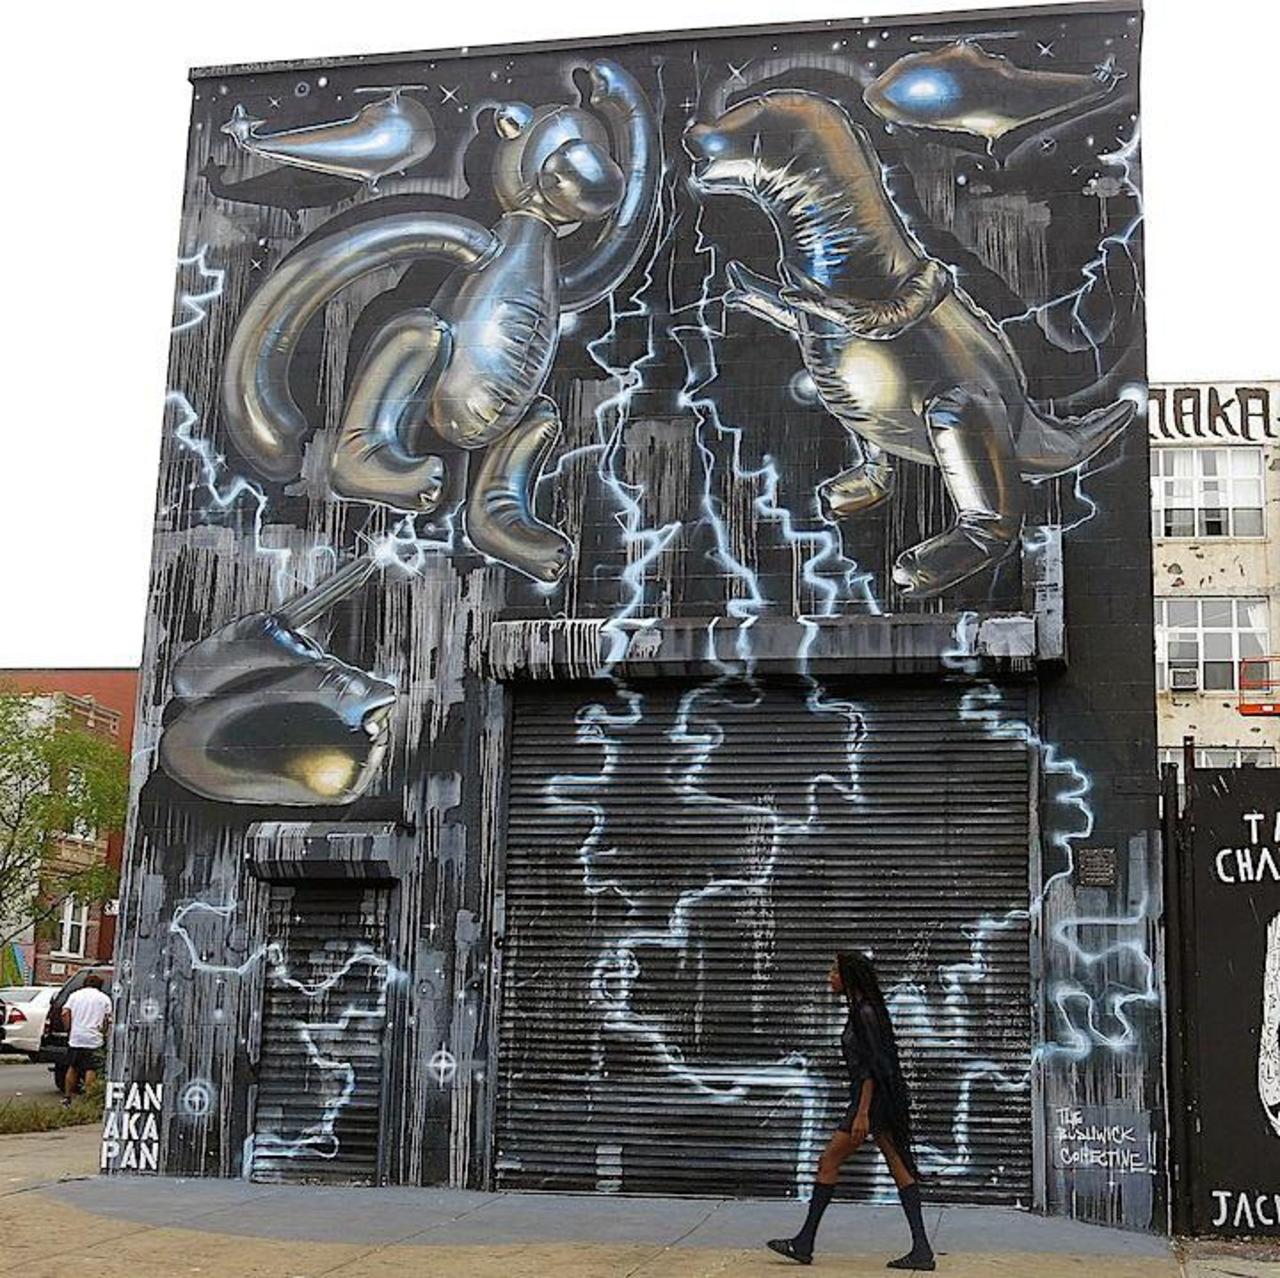 #StreetArt NYC | Curious Characters on NYC Streets, Part VII
http://streetartnyc.org/blog/2015/10/01/curious-characters-on-nyc-streets-part-vii-fanakapan-bebar-telleache-pyramid-oracle-and-mr-nerds/
#urbanart #graffiti https://t.co/JK5zySKTOn